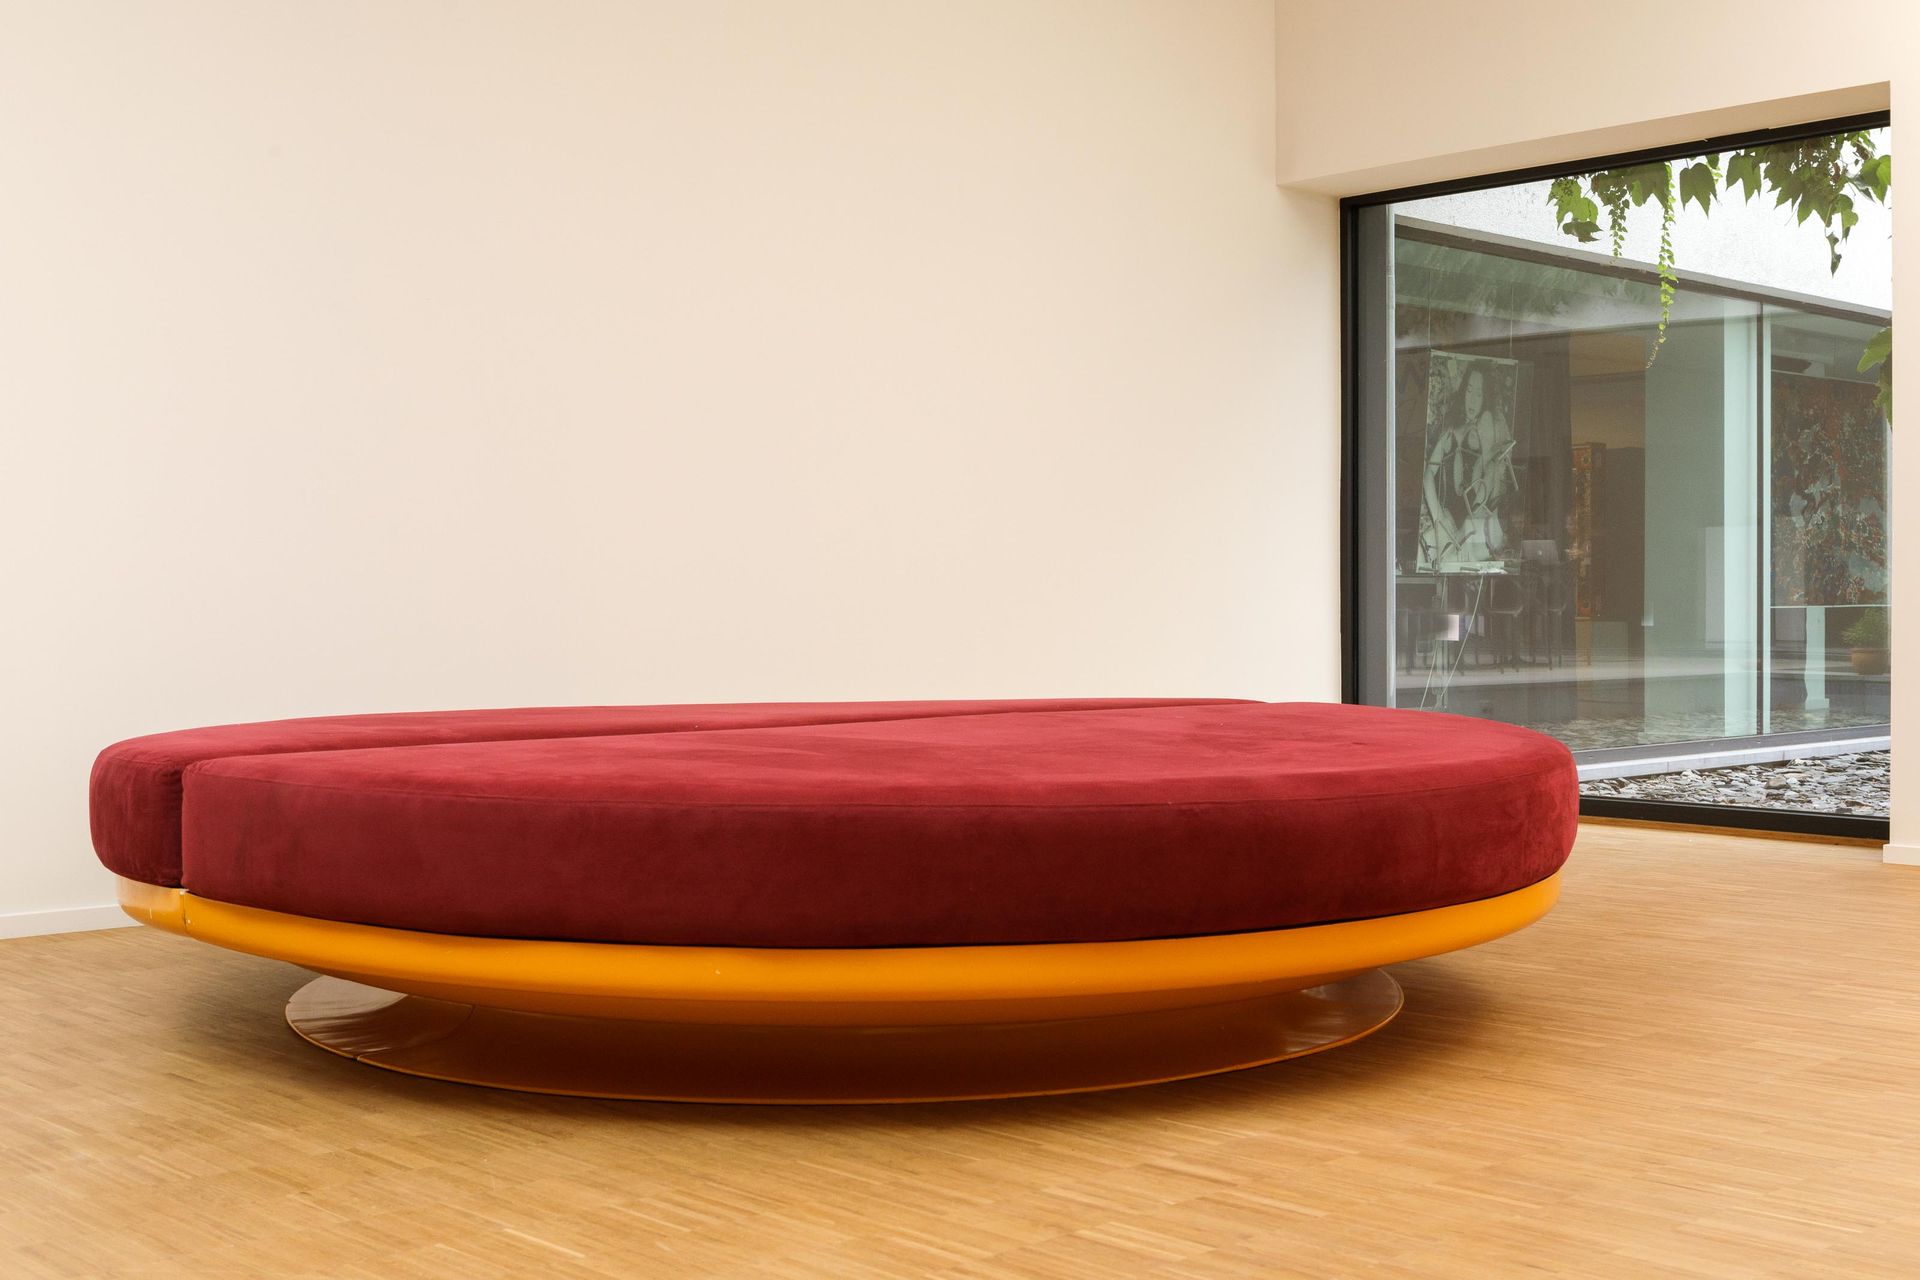 WOLFGANG FEIERBACH (1937-2014) / FG DESIGN 圆床。1968年的设计。

黄色玻璃纤维增强塑料。采用波尔多绒面革为椅垫。&hellip;